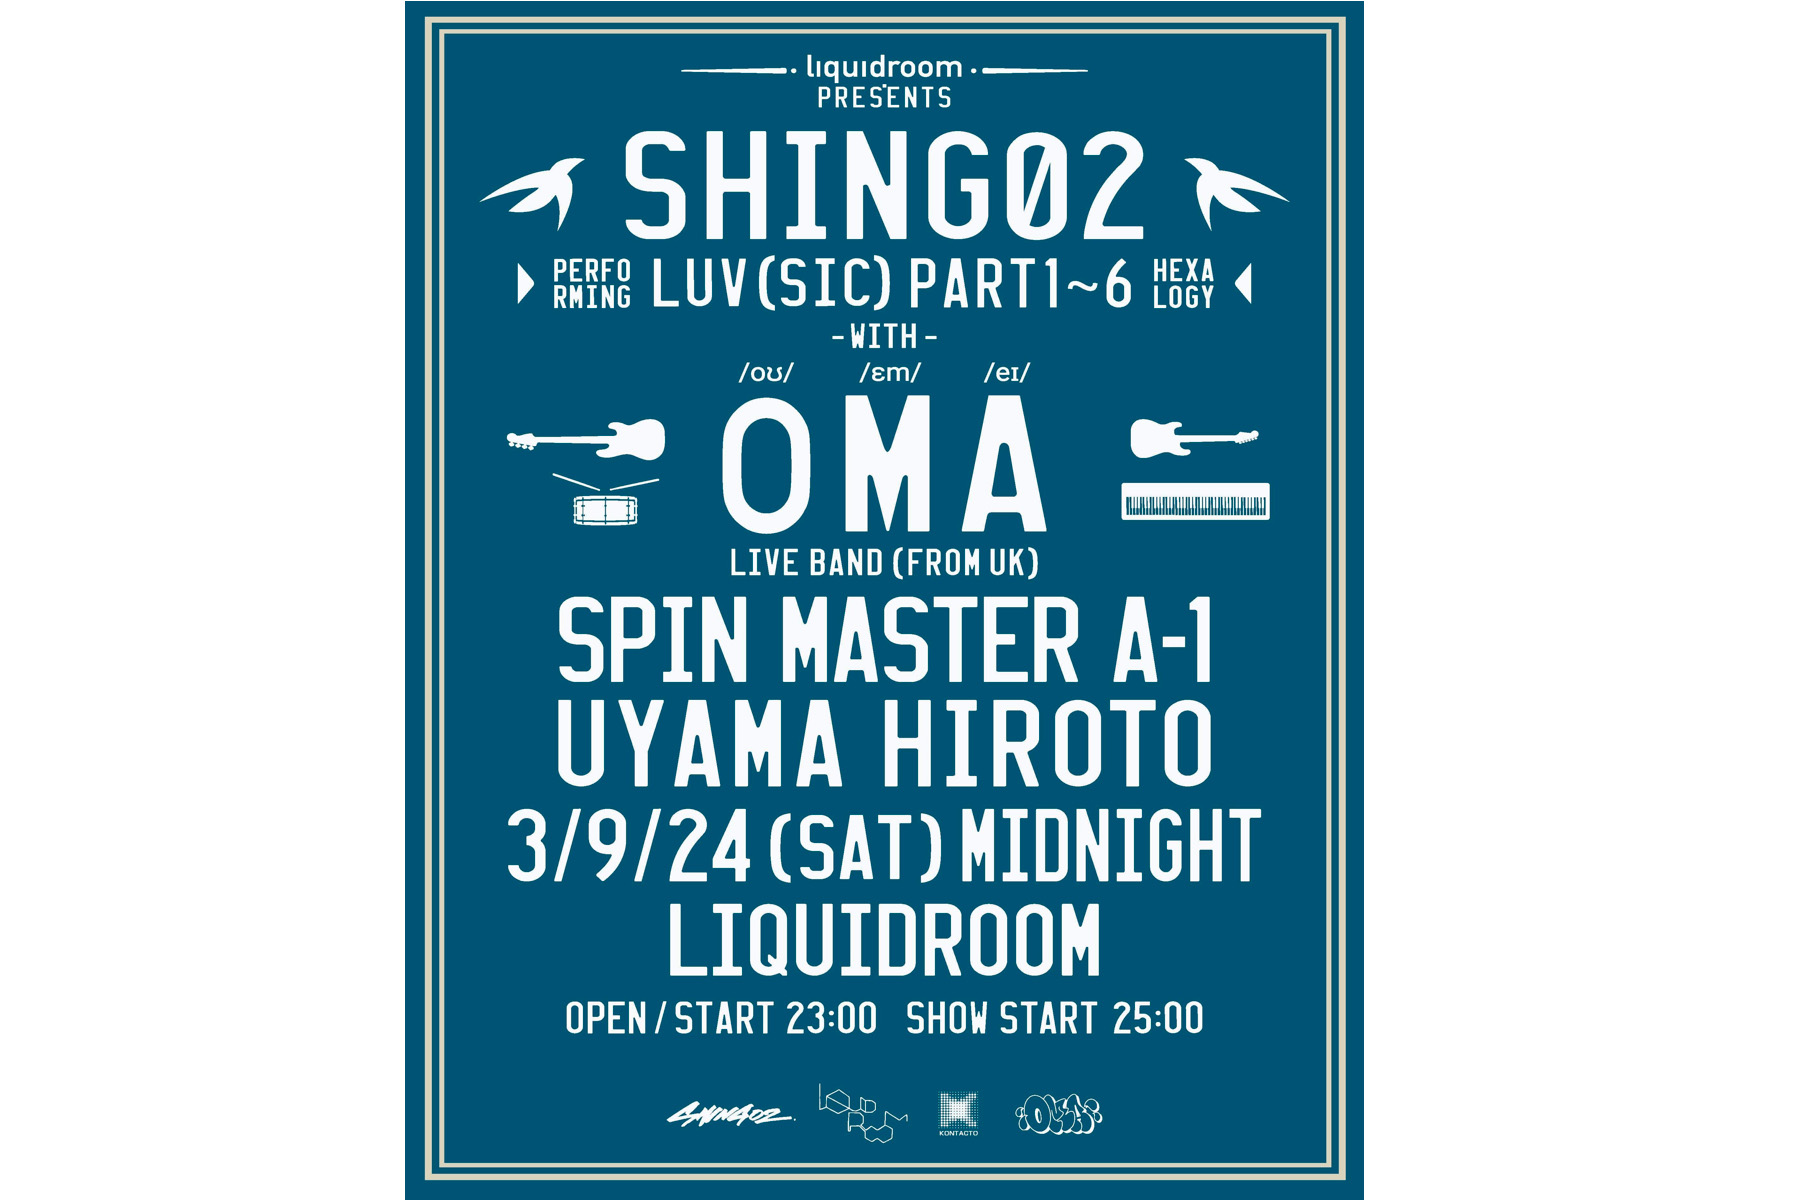 3.9 Sat. liquidroom presents</br>[Shing02 & OMA Live showcase]